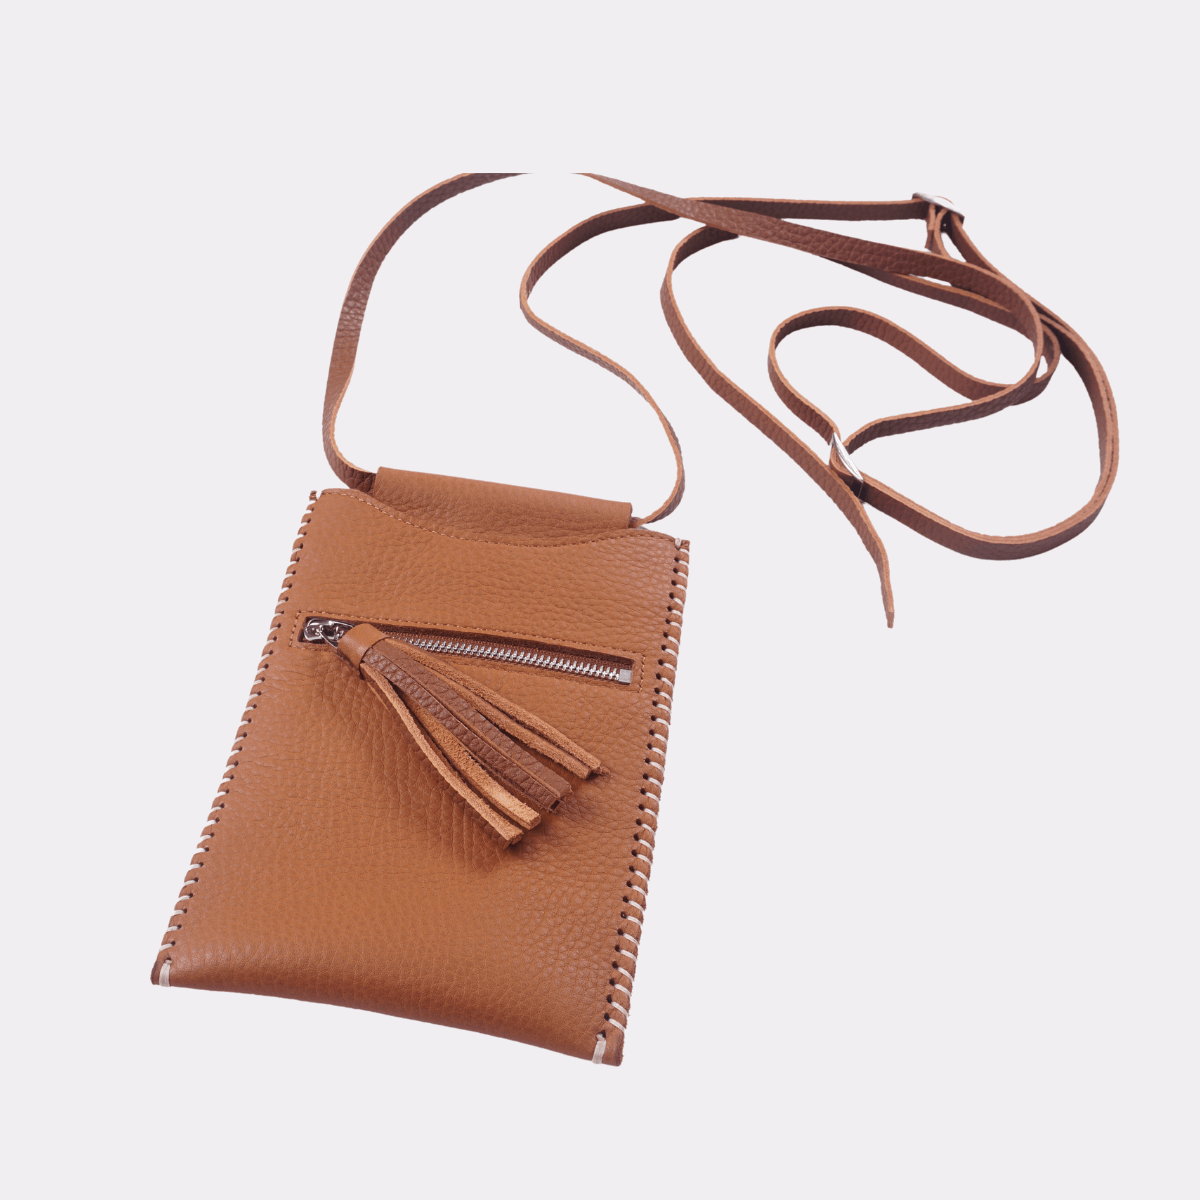 Customizable Genuine Leather Ladies Bag Texra - Tan